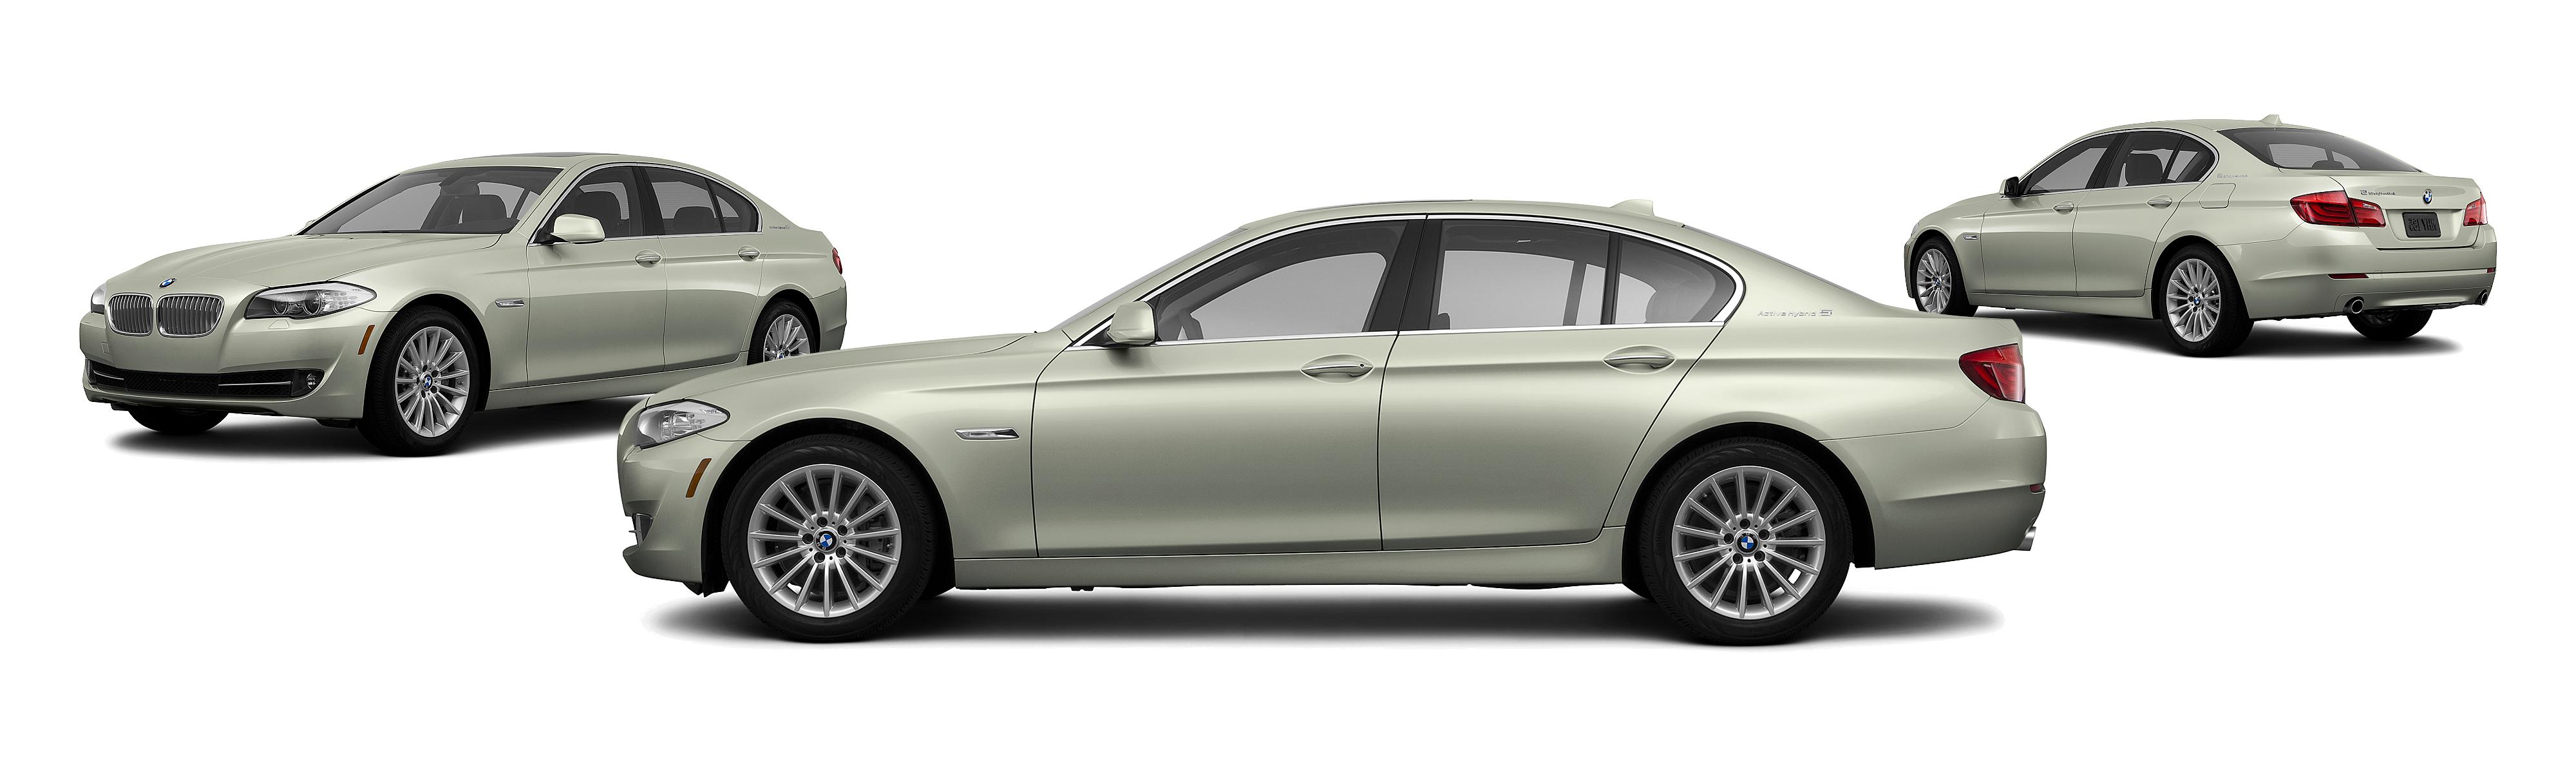 2013 BMW 5 Series ActiveHybrid 5 4dr Sedan - Research - GrooveCar